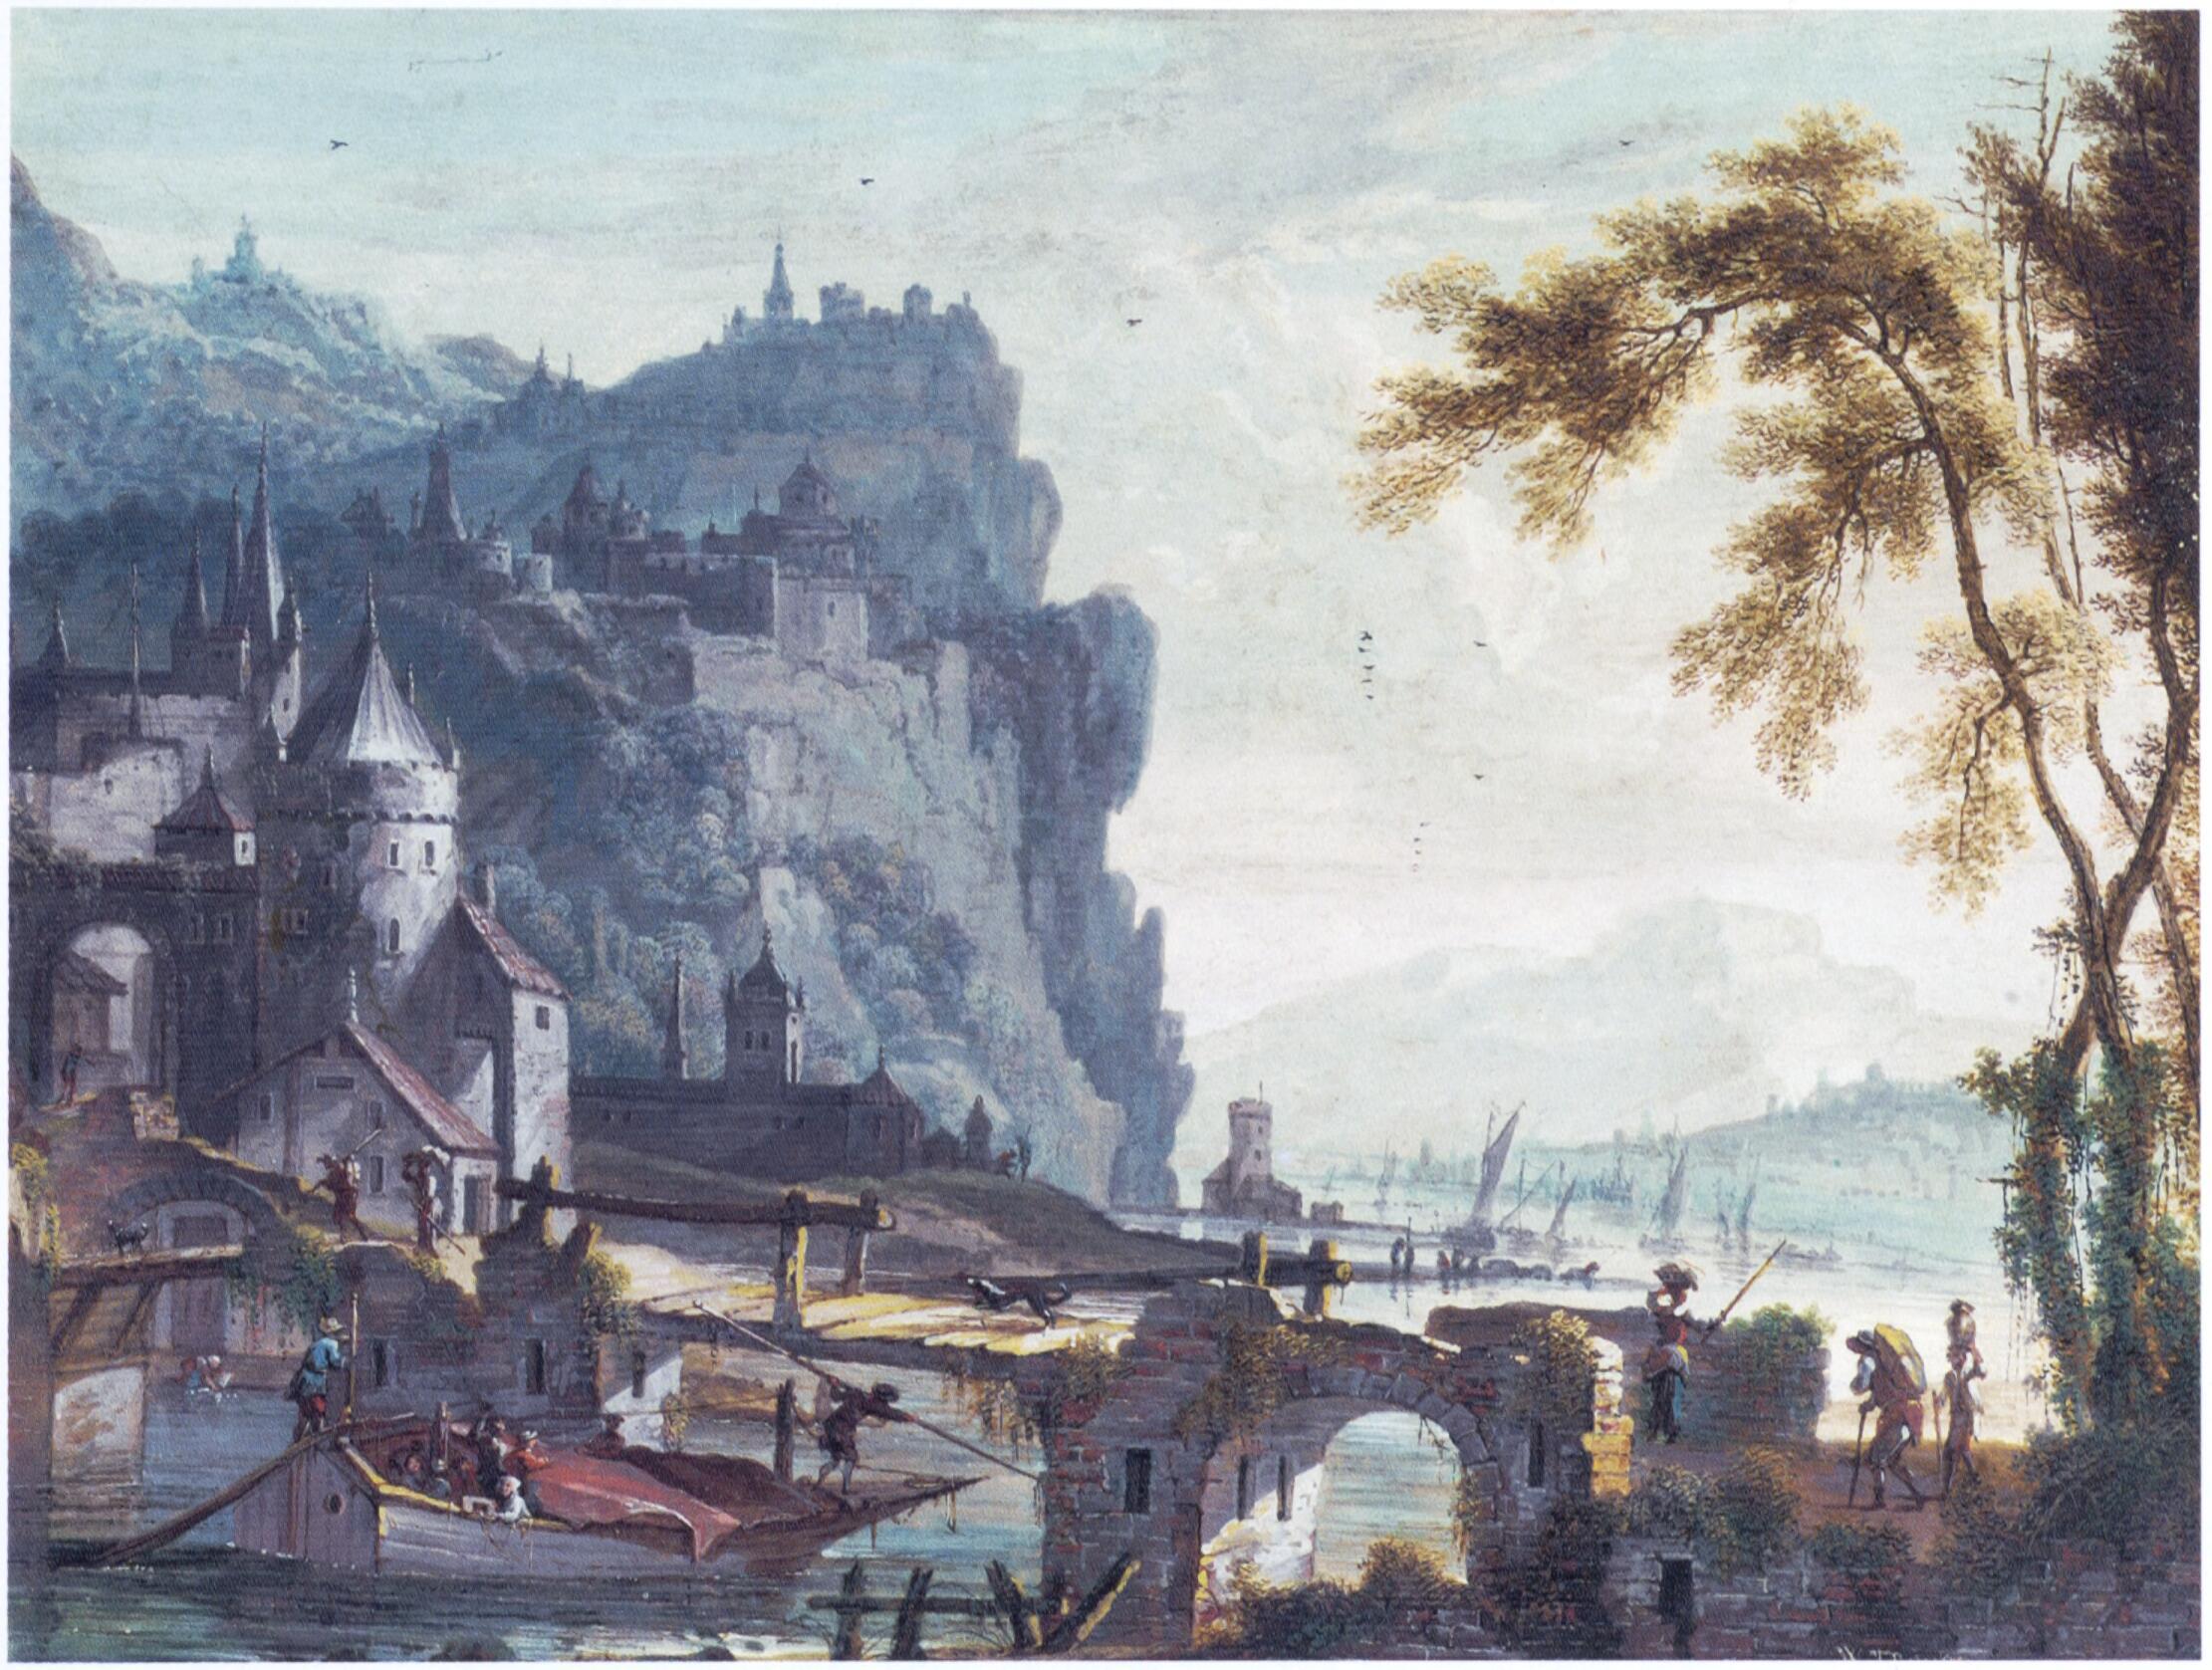 File:Willem Troost- fantasy Rhine landscape with castle town.jpg - Wikipedia